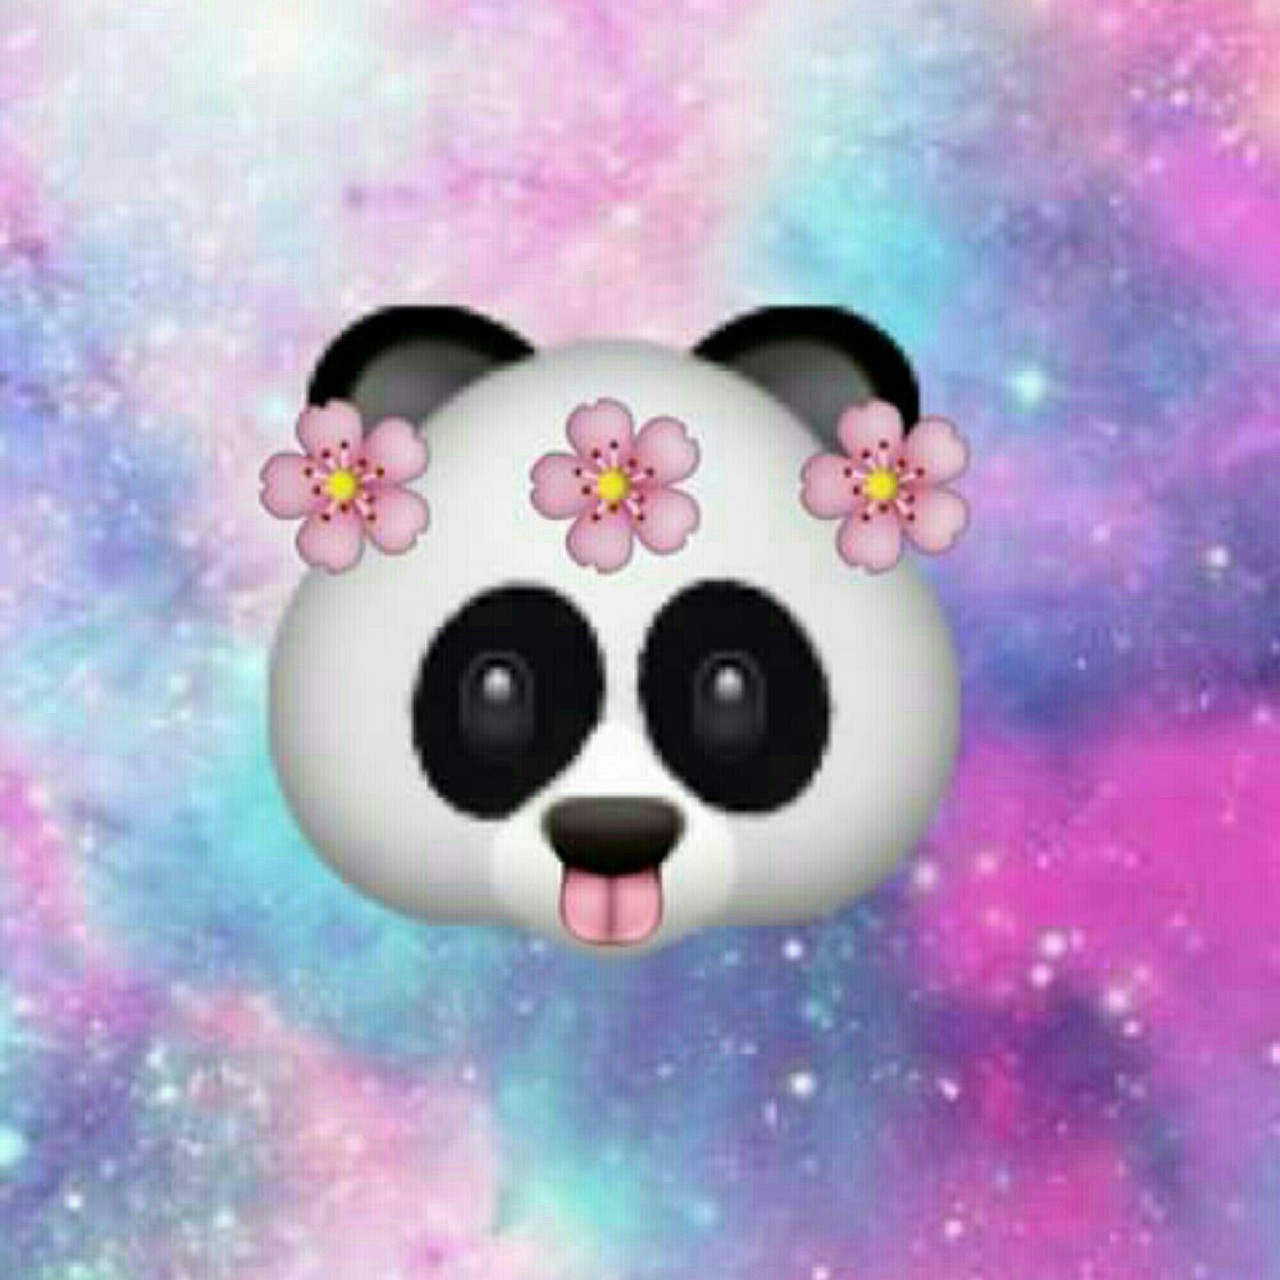 Emoji, Galaxy And Space - Galaxy Panda Emoji - HD Wallpaper 